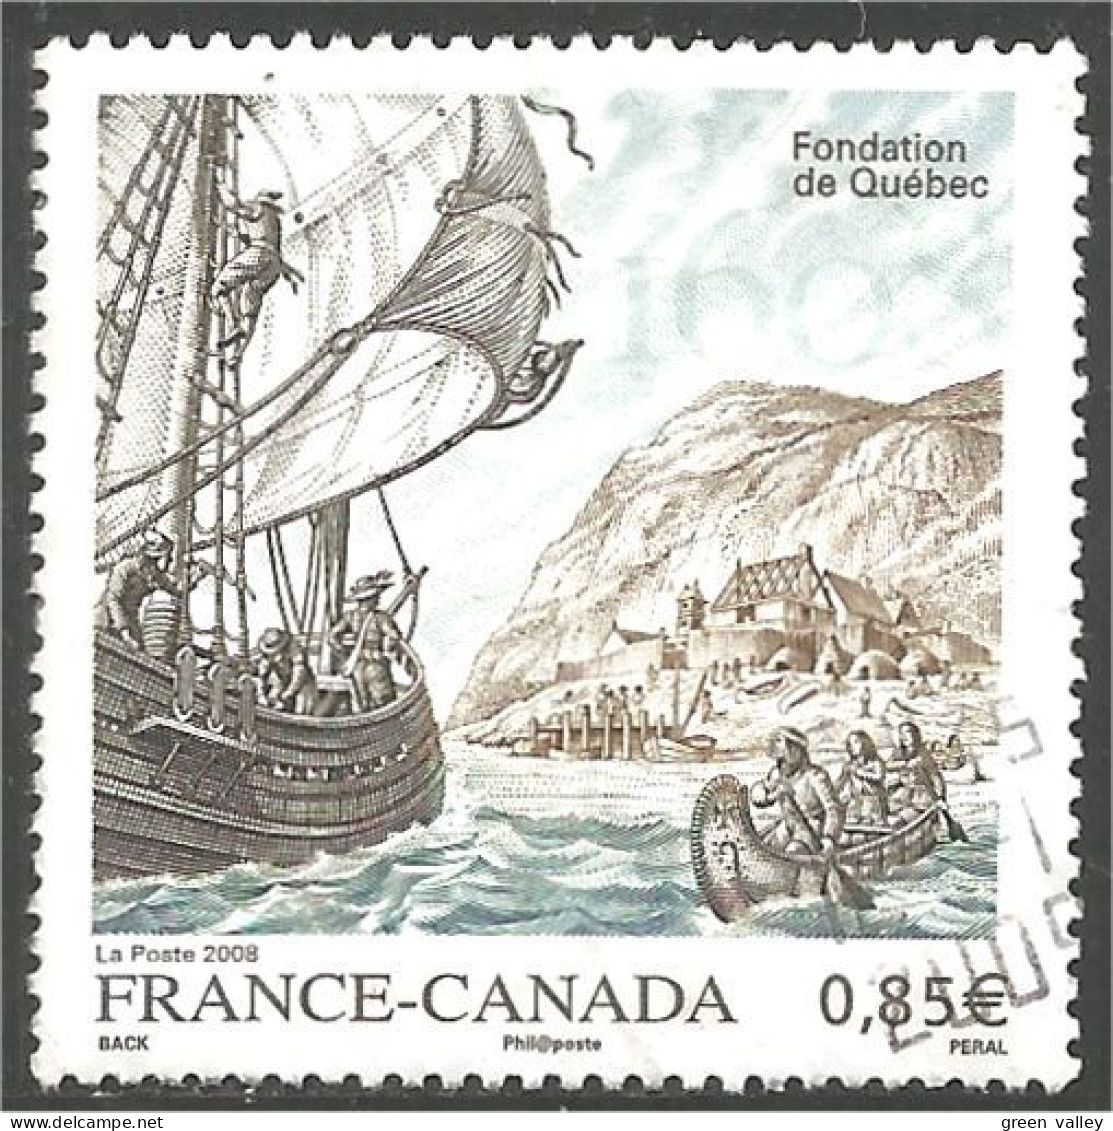 331eu-109 France Fondation Québec Foundation Canot Canoe Indien Indian - Indianer